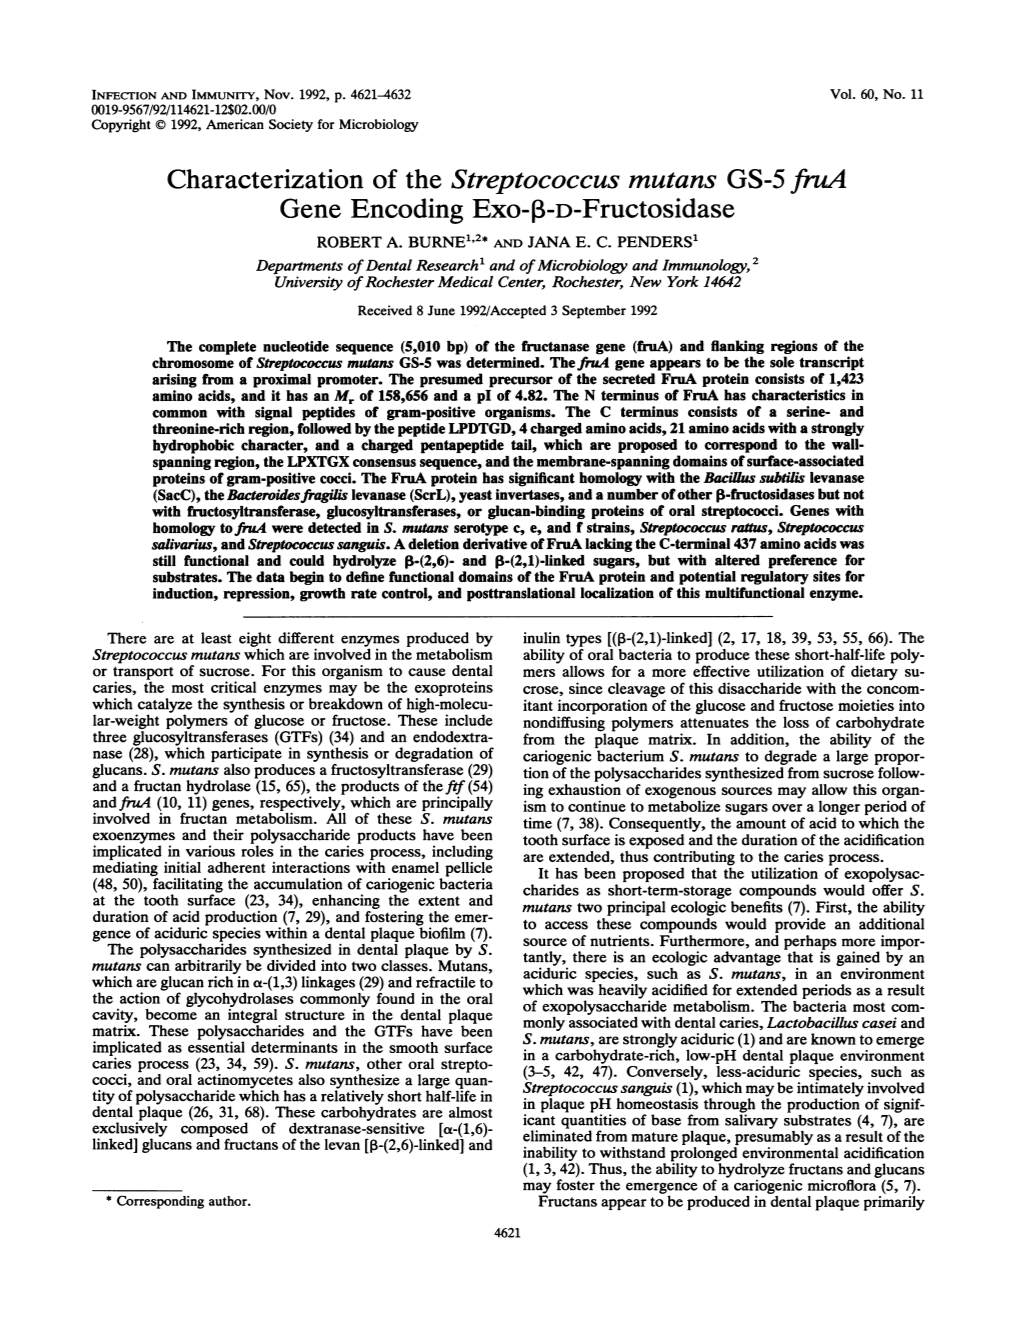 Characterization of the Streptococcus Mutans GS-5Frua Gene Encoding